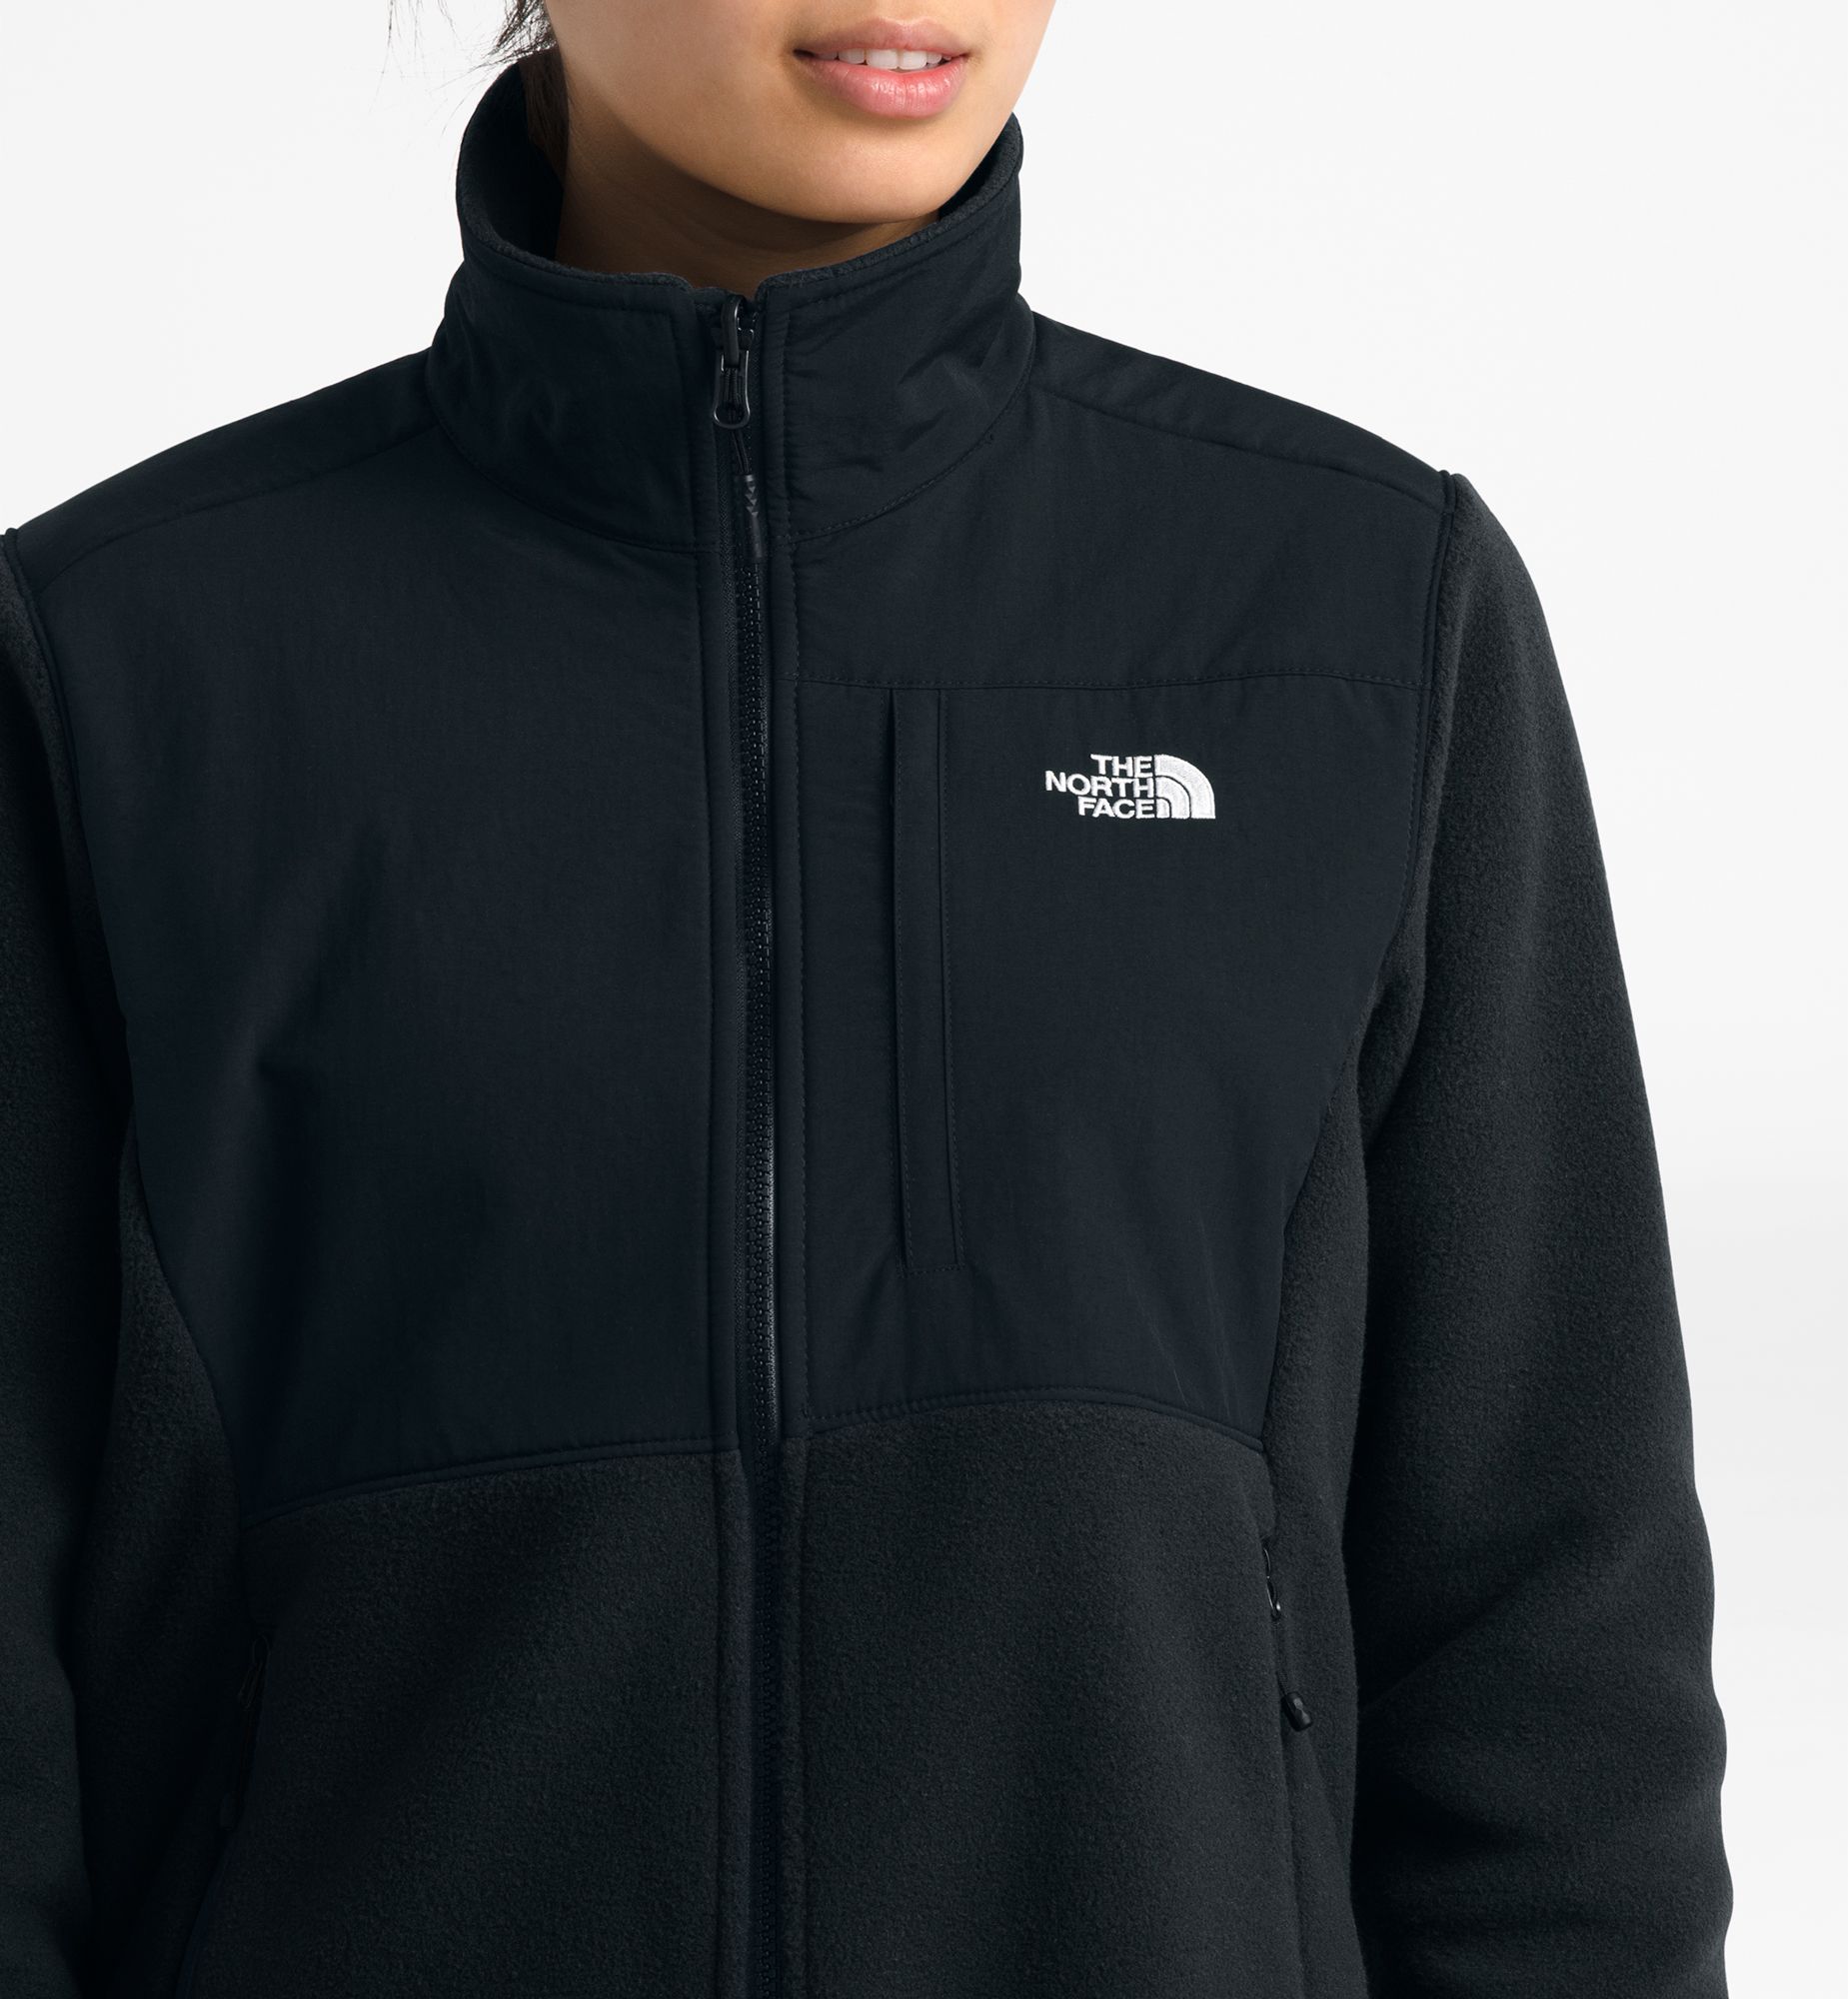 The North Face Women's Fleece Jacket Discount, 60% OFF | www.rupit.com